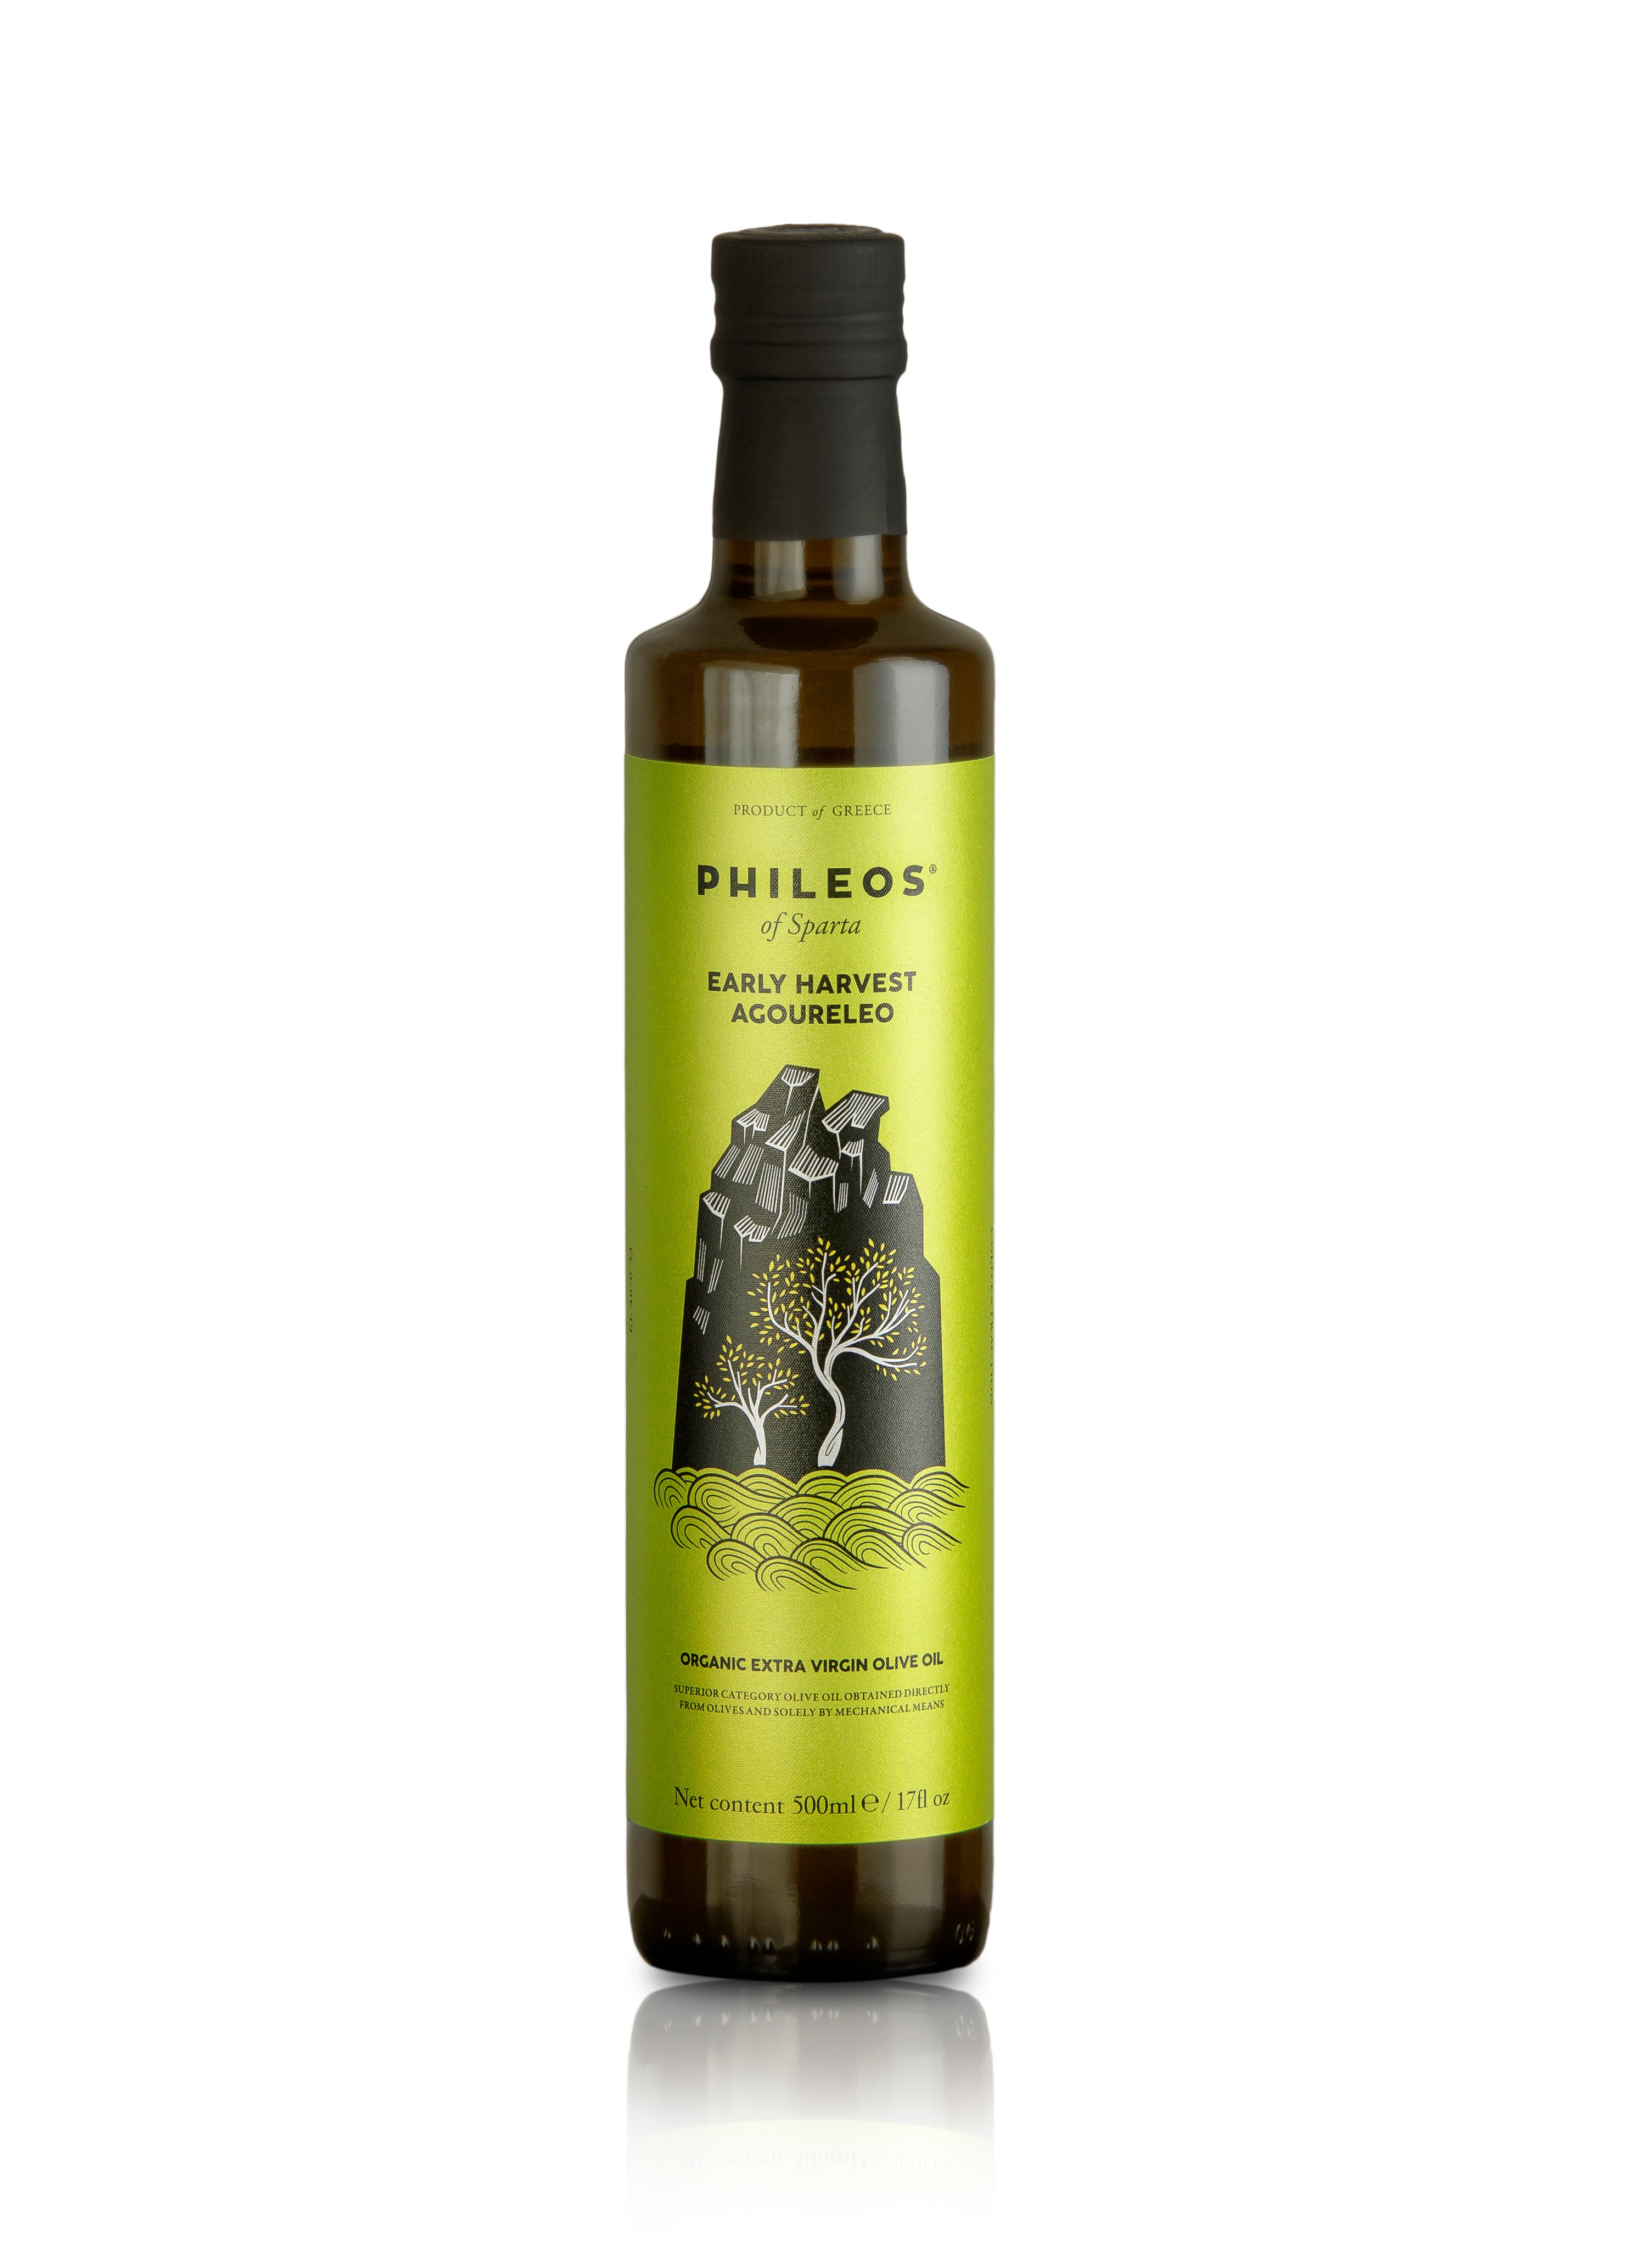 Phileos Organic Early Harvest (Agoureleo) Extra Virgin Olive Oil - 500ml